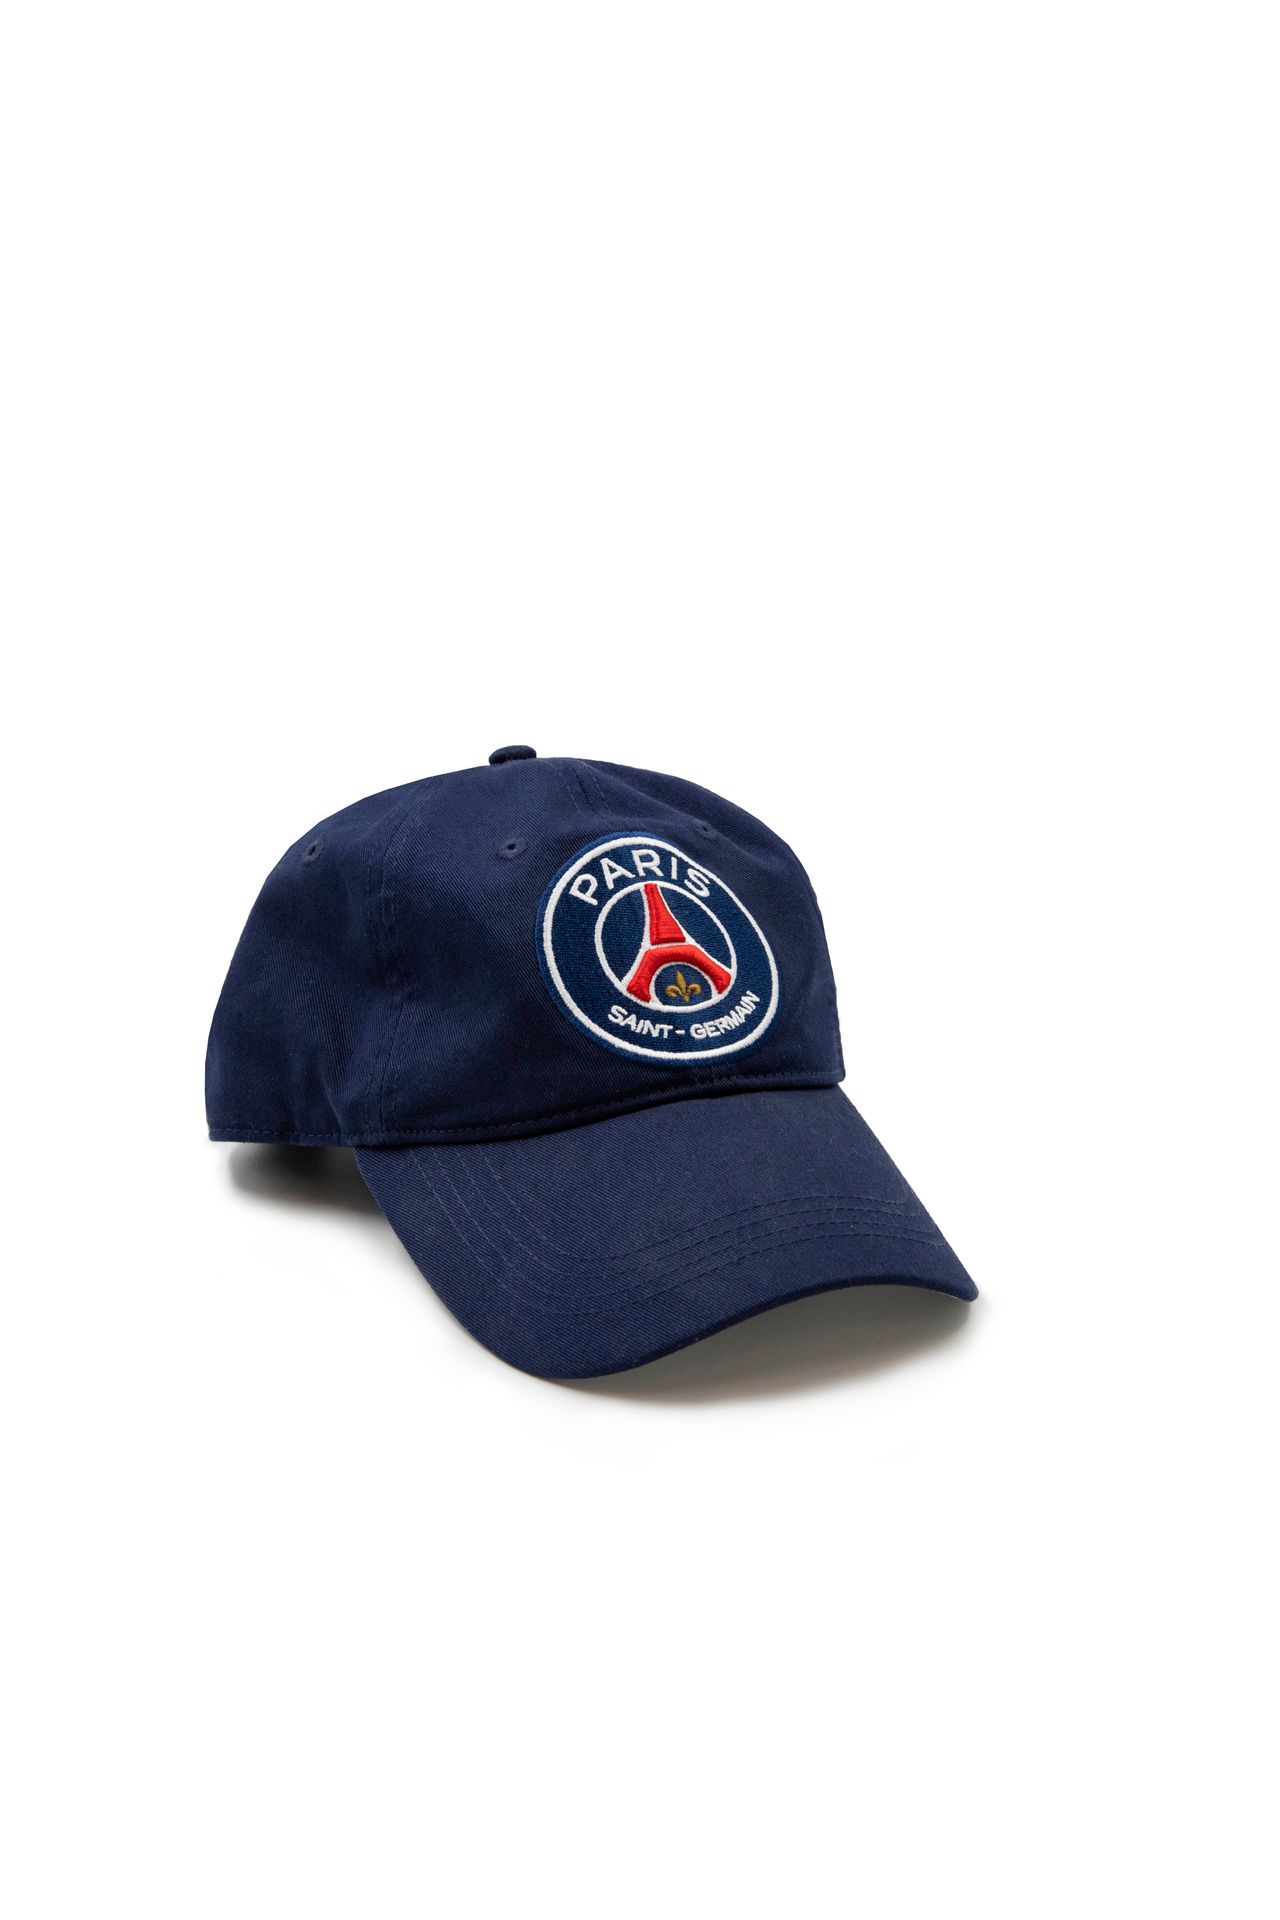 Teddy RINER 巴黎圣日耳曼队的帽子*，由泰迪-里纳在2017年与巴黎圣日耳曼柔道队签署合同时佩戴。*泰迪-瑞纳的个性化献词